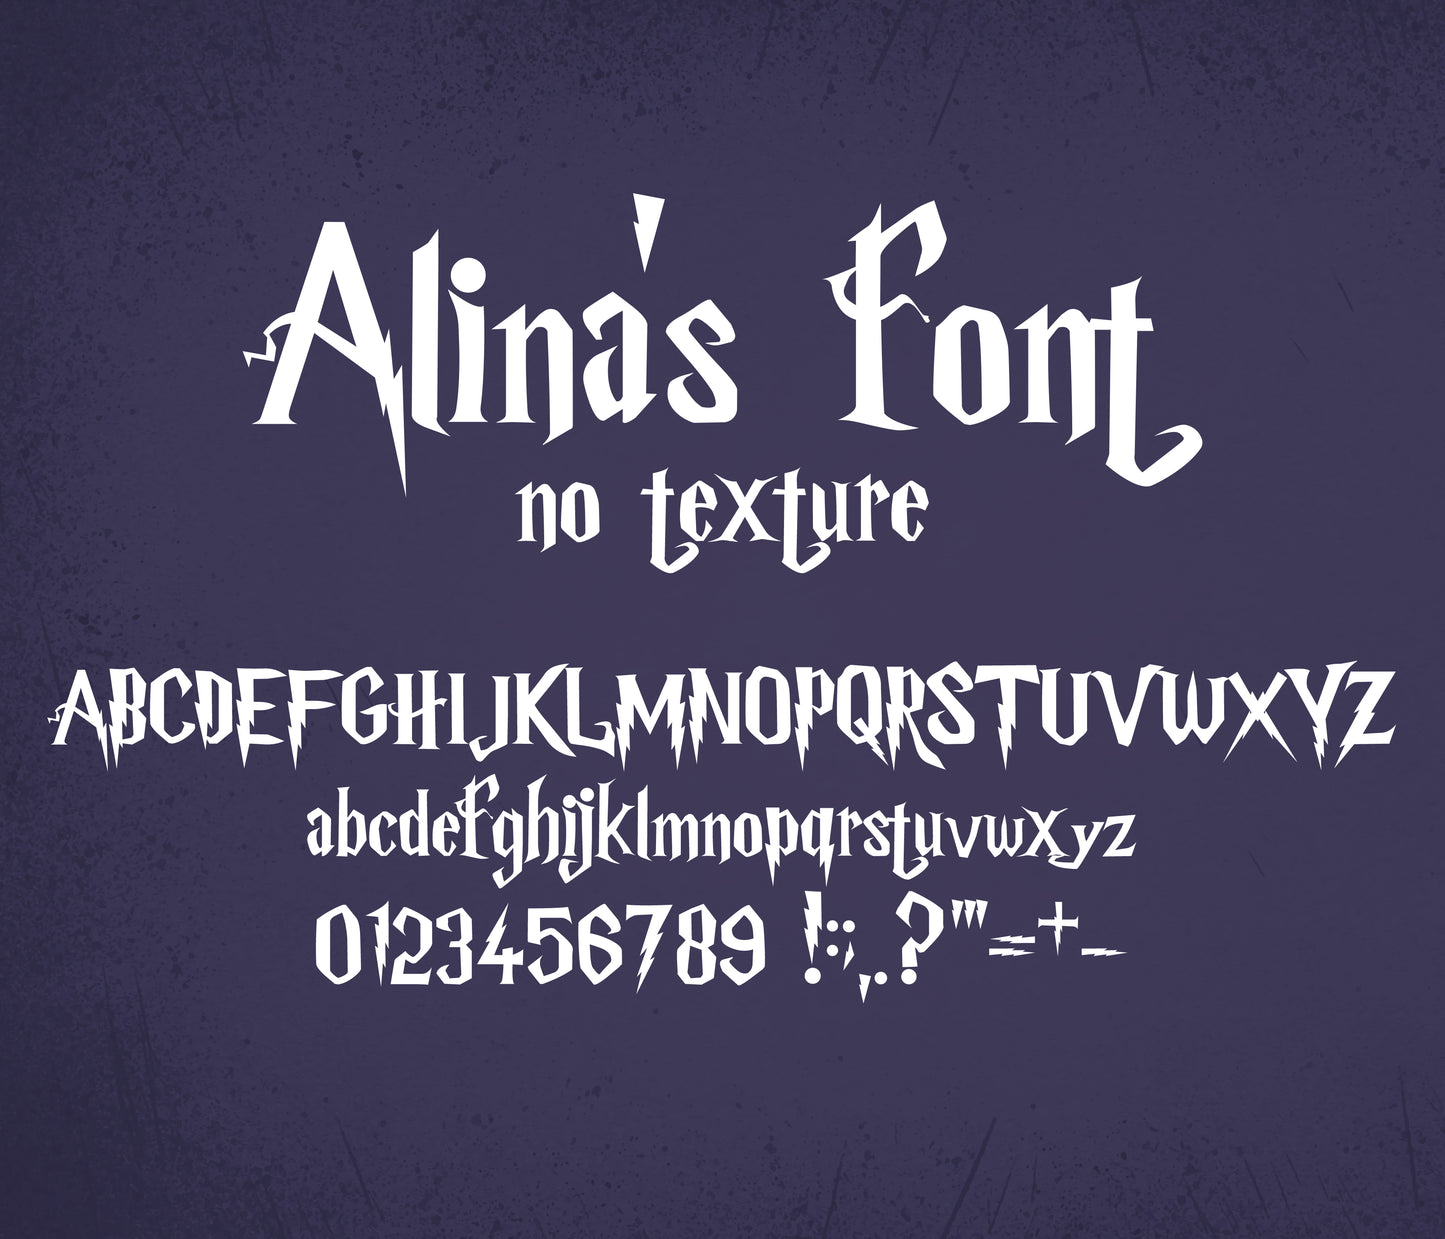 Harry Potter Textured Font